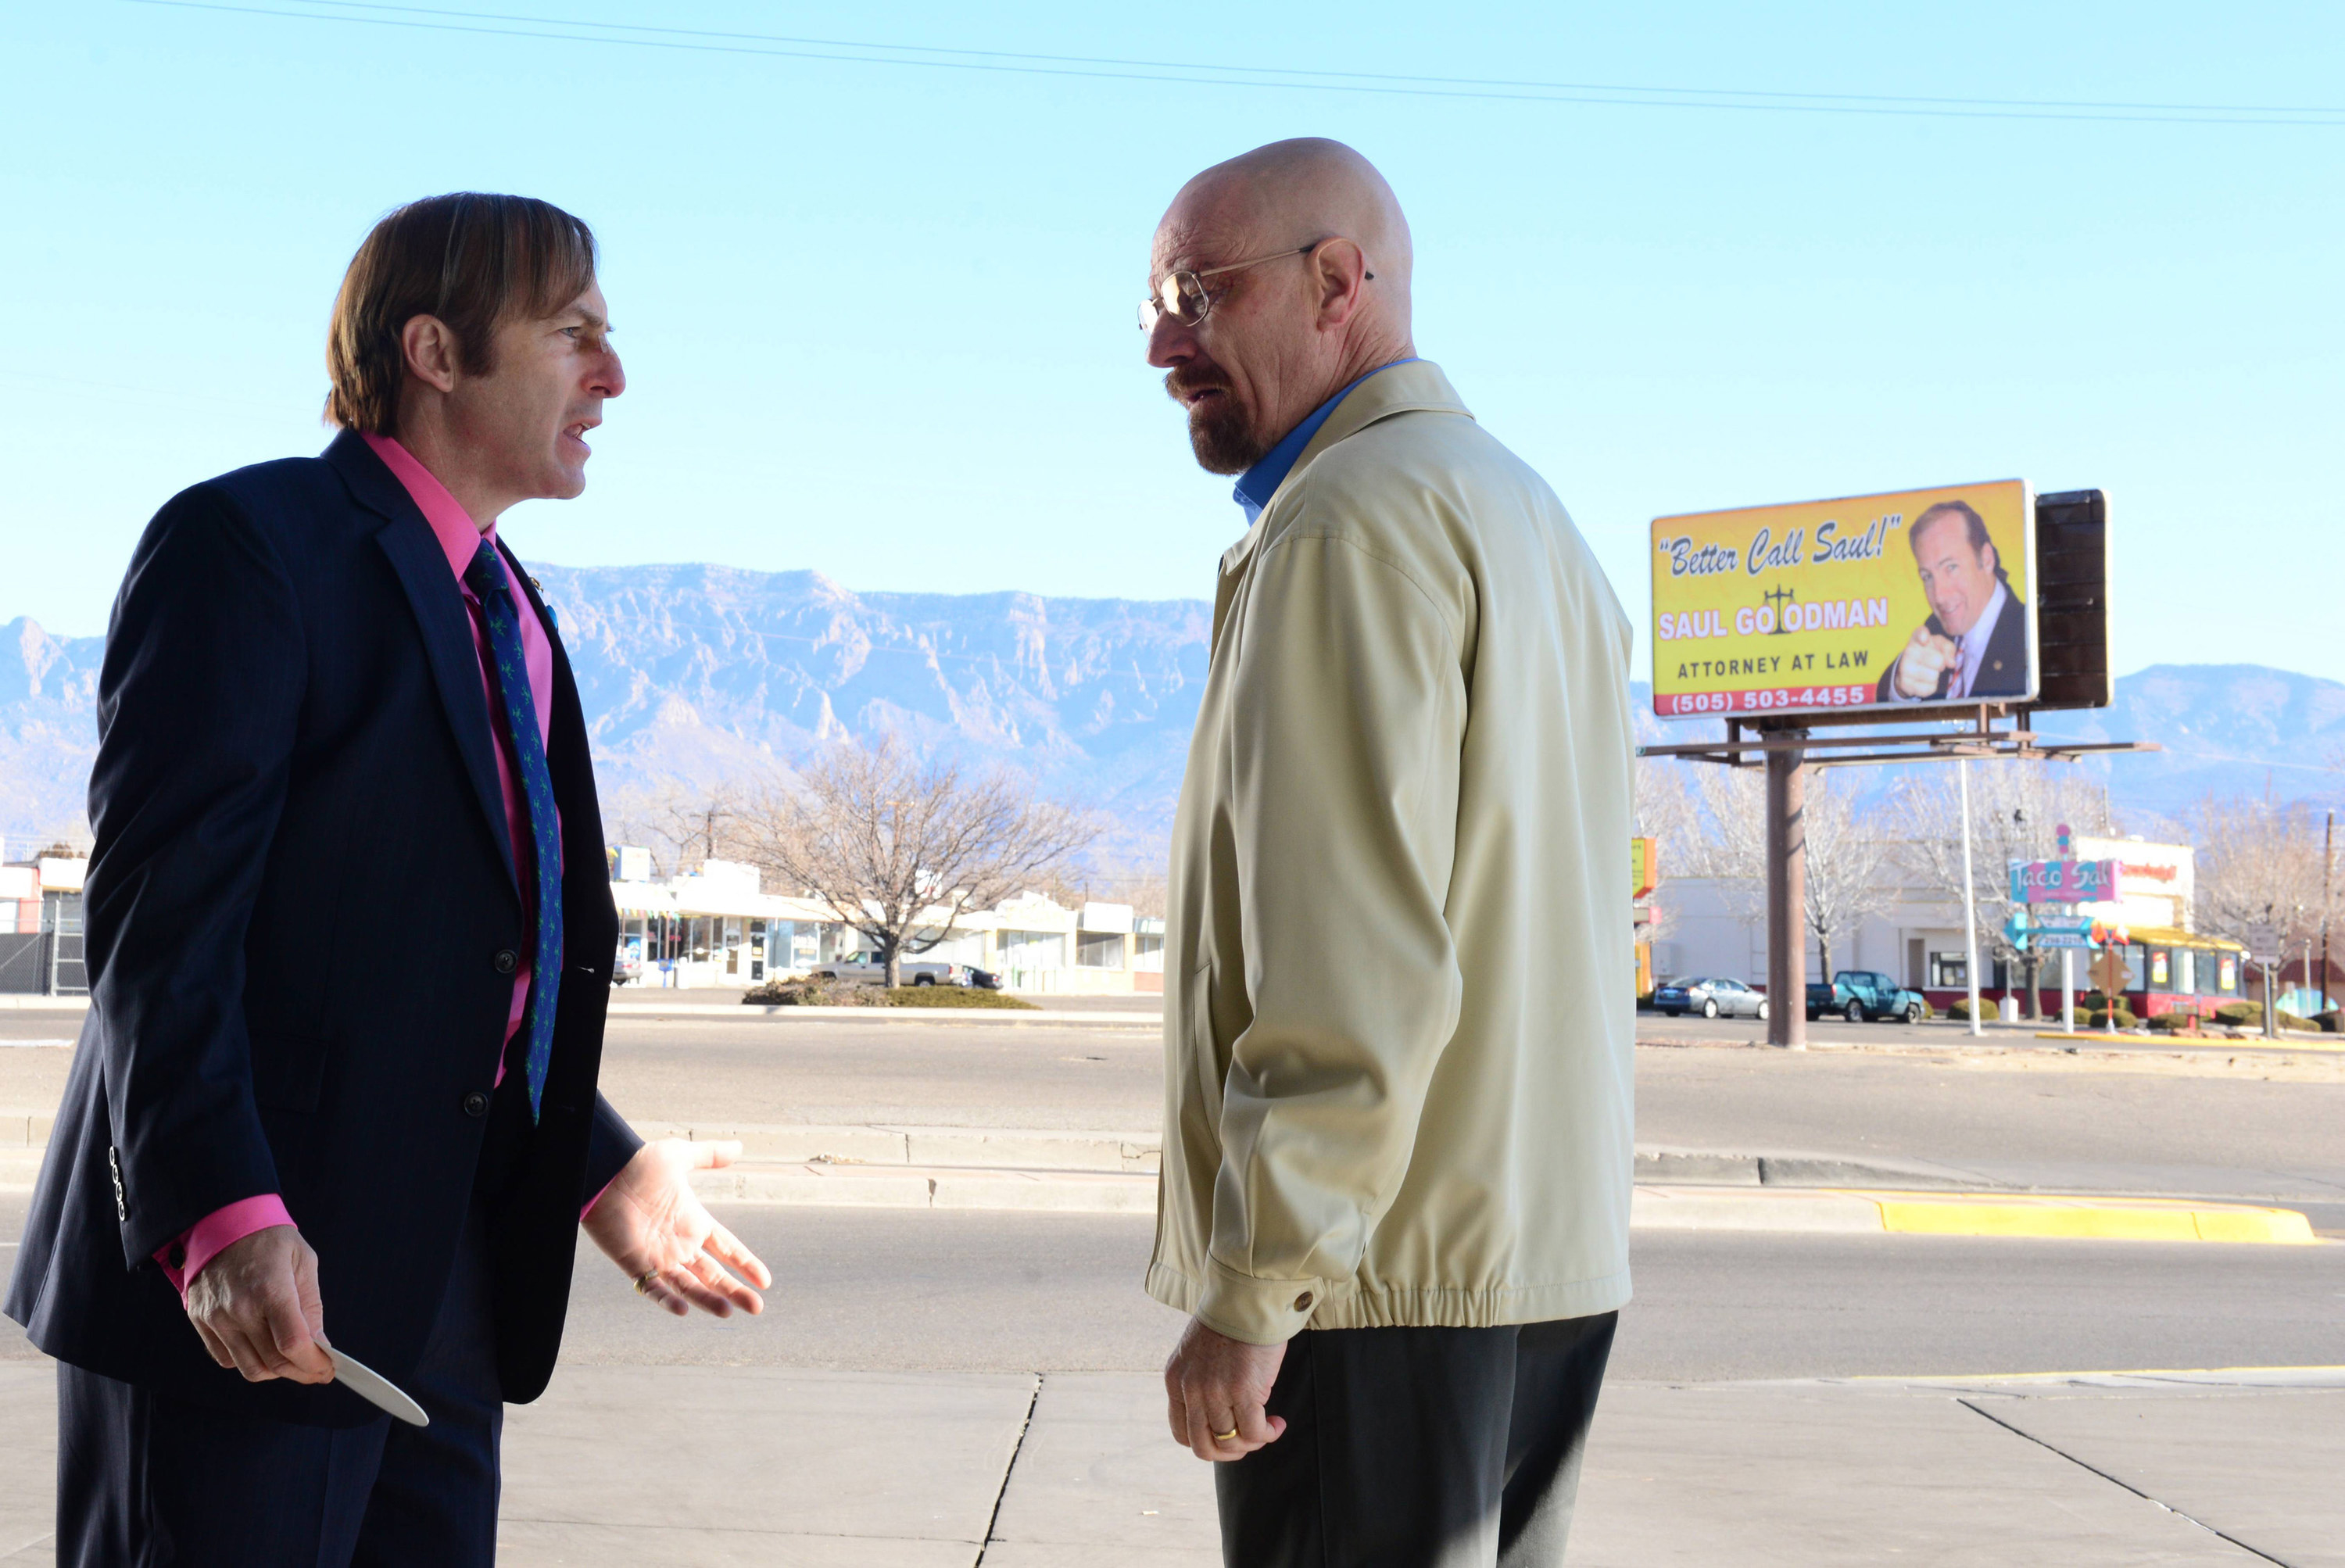 Saul and Walt argue in a parking lot underneath a better caul saul bulletin board